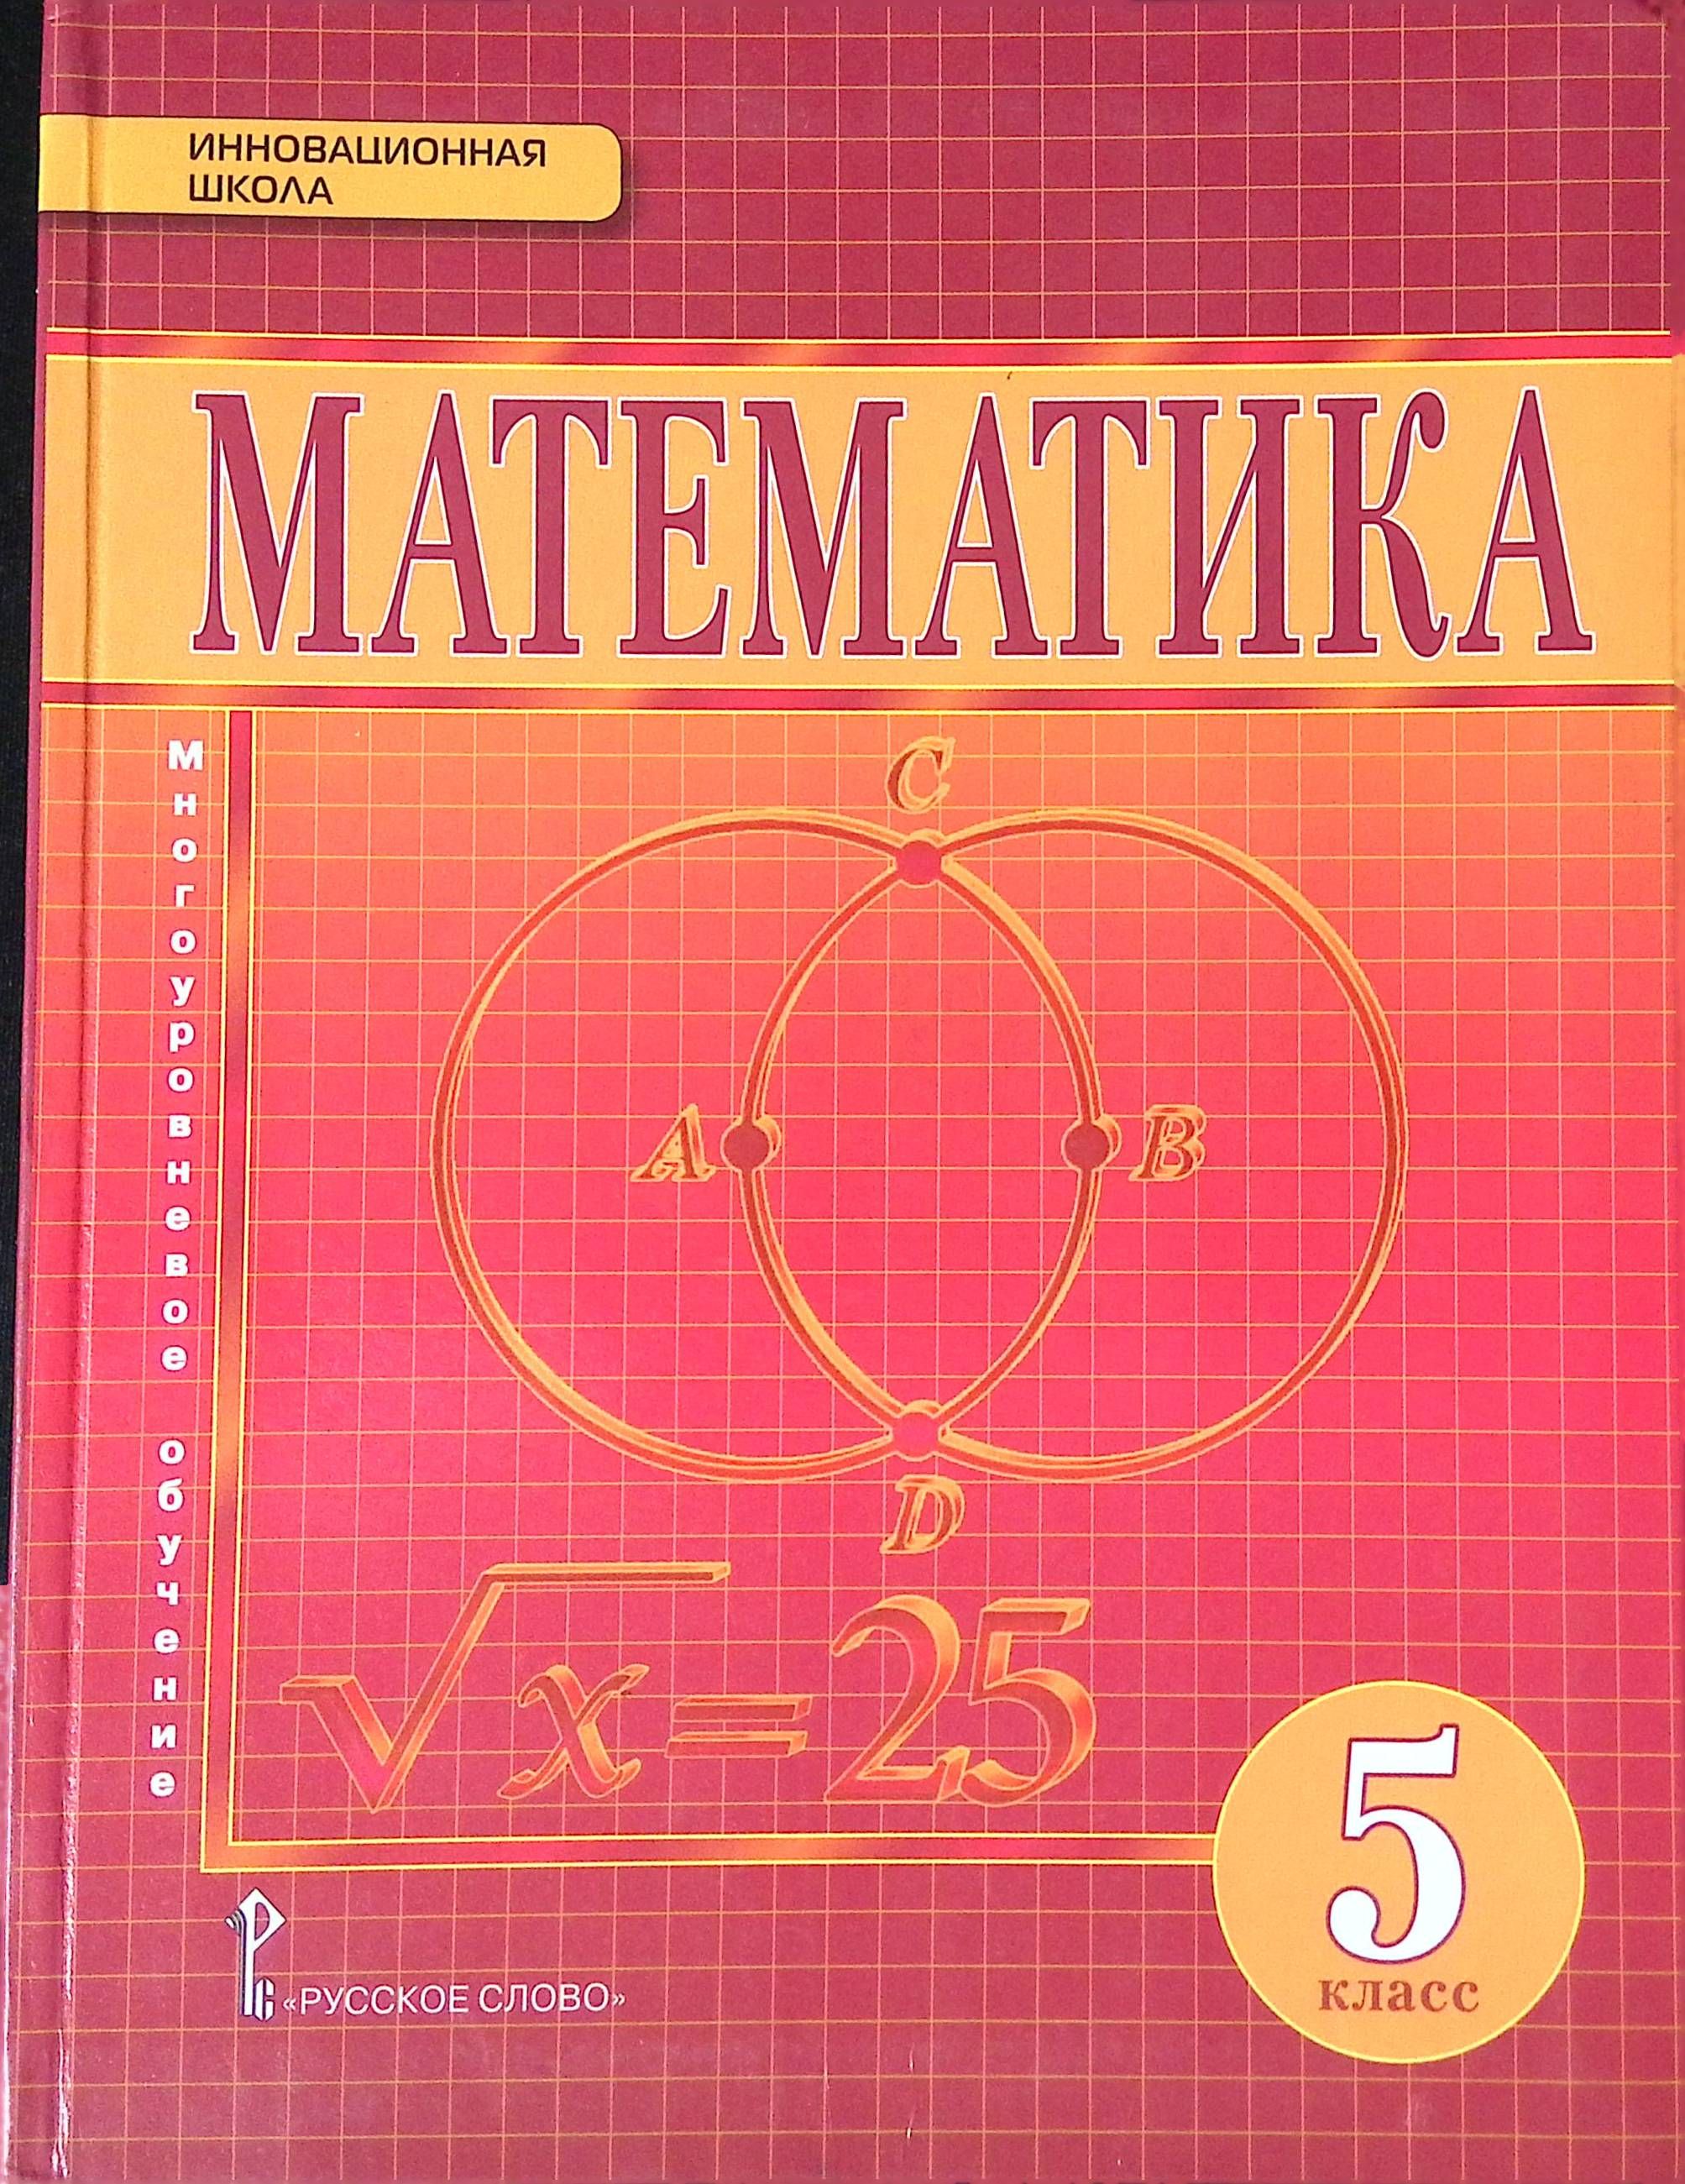 Математика 6 класс учебник 965. Математика Никитин , Козлов 5 класс. Учебник математики. Учебник математики 6 класс. Математика 6 класс. Учебник.